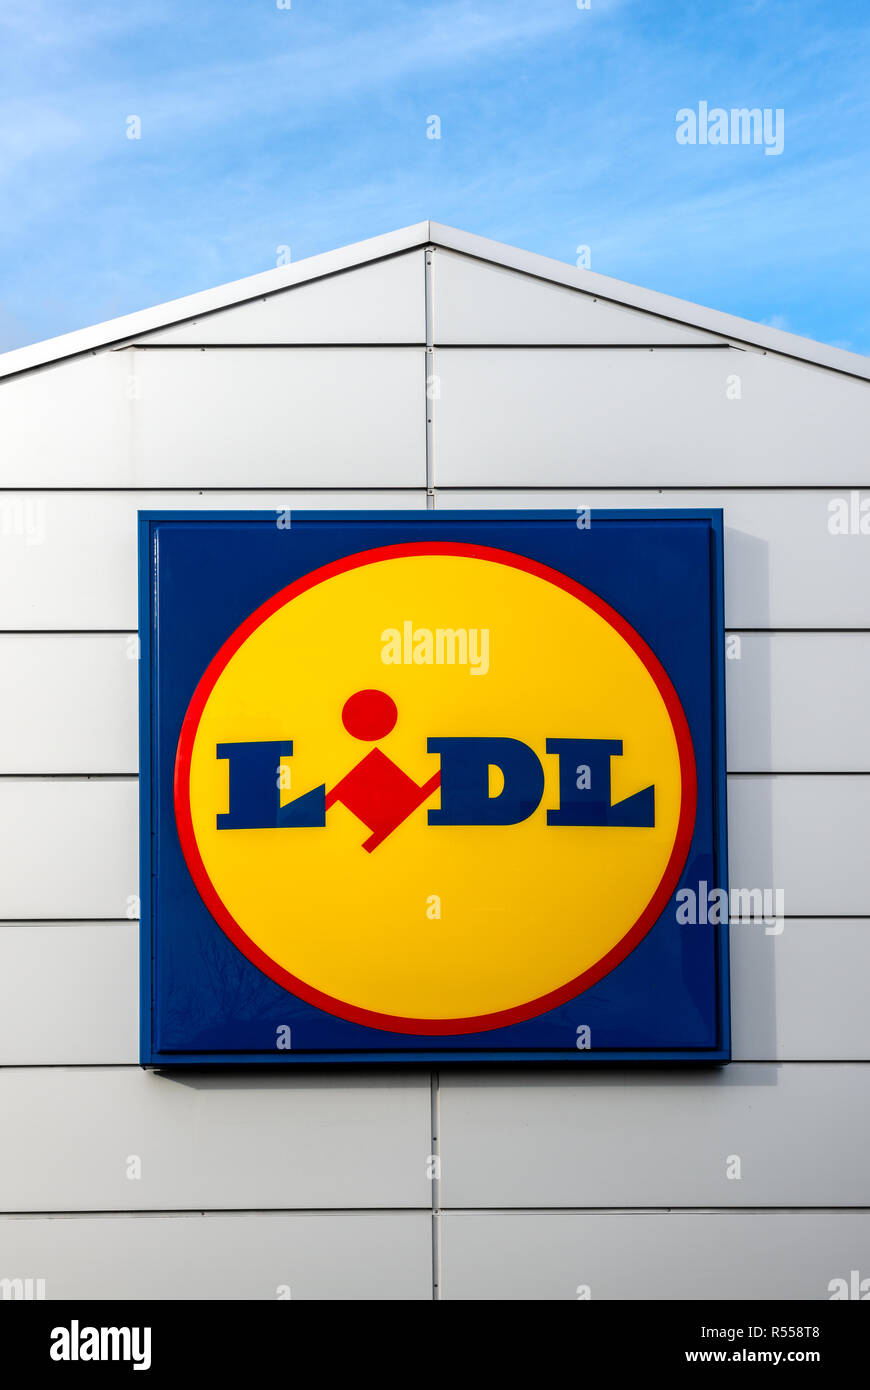 Lidl logo sign against blue sky Stock Photo